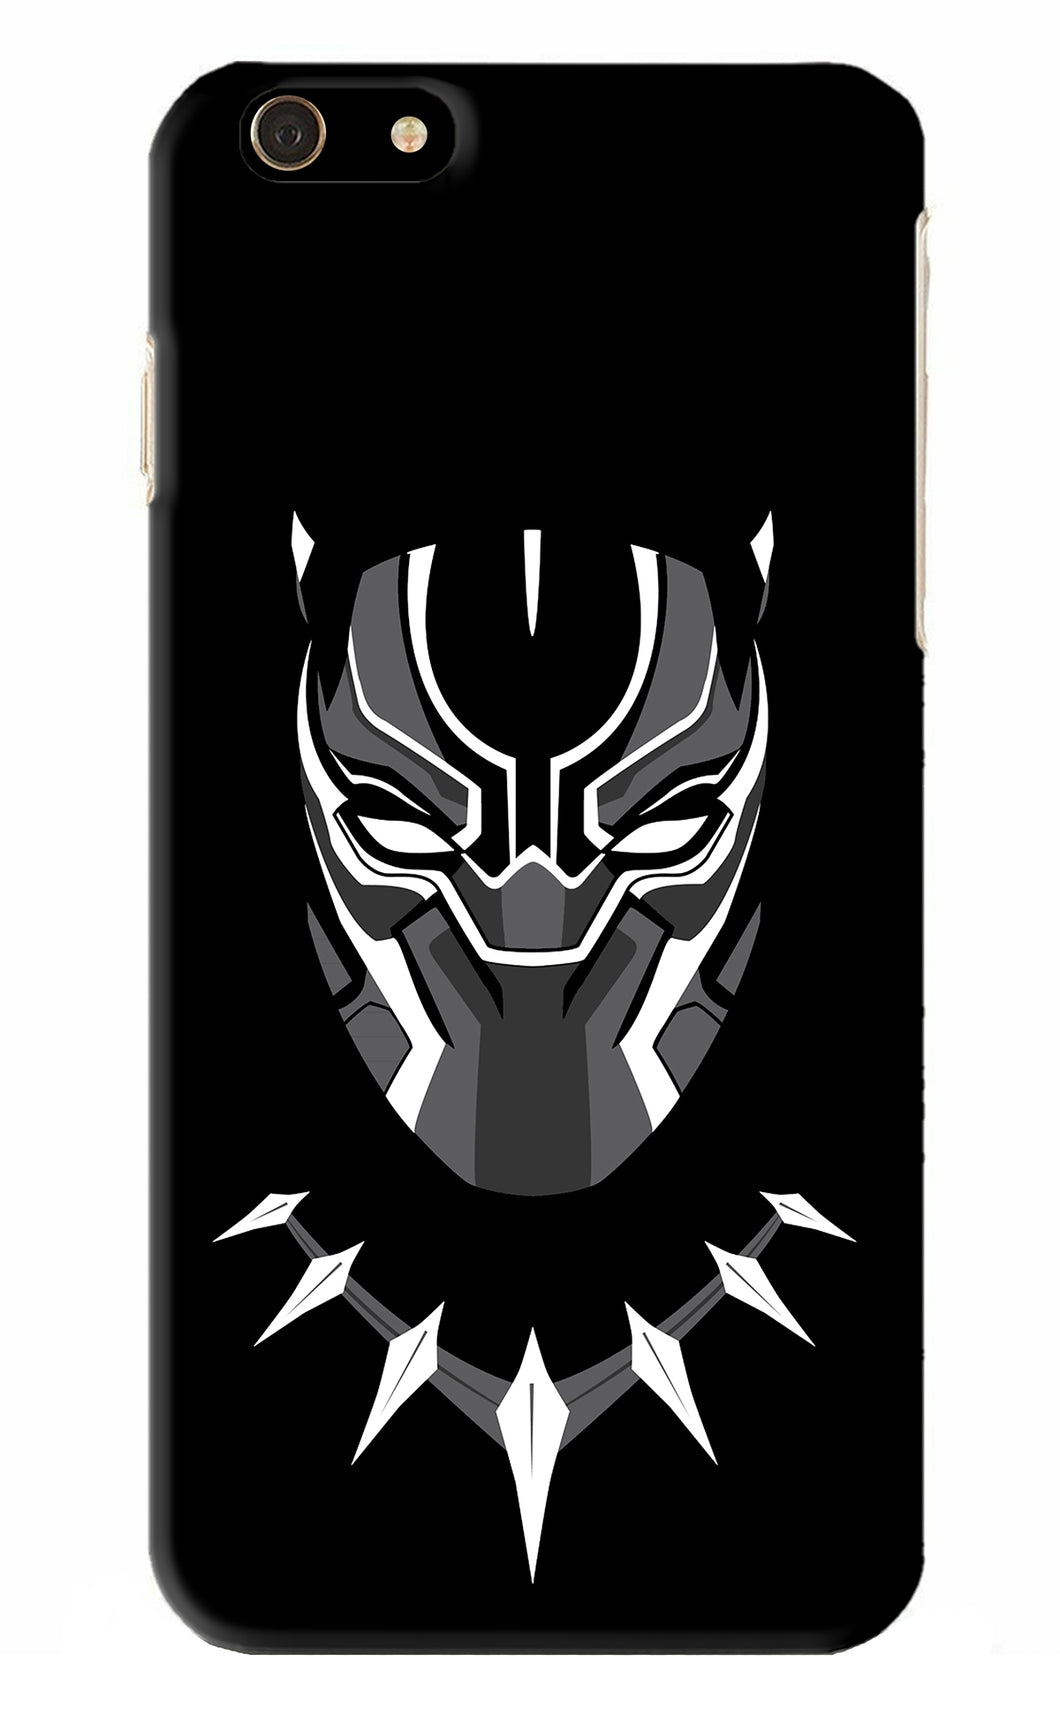 Black Panther iPhone 6S Plus Back Skin Wrap